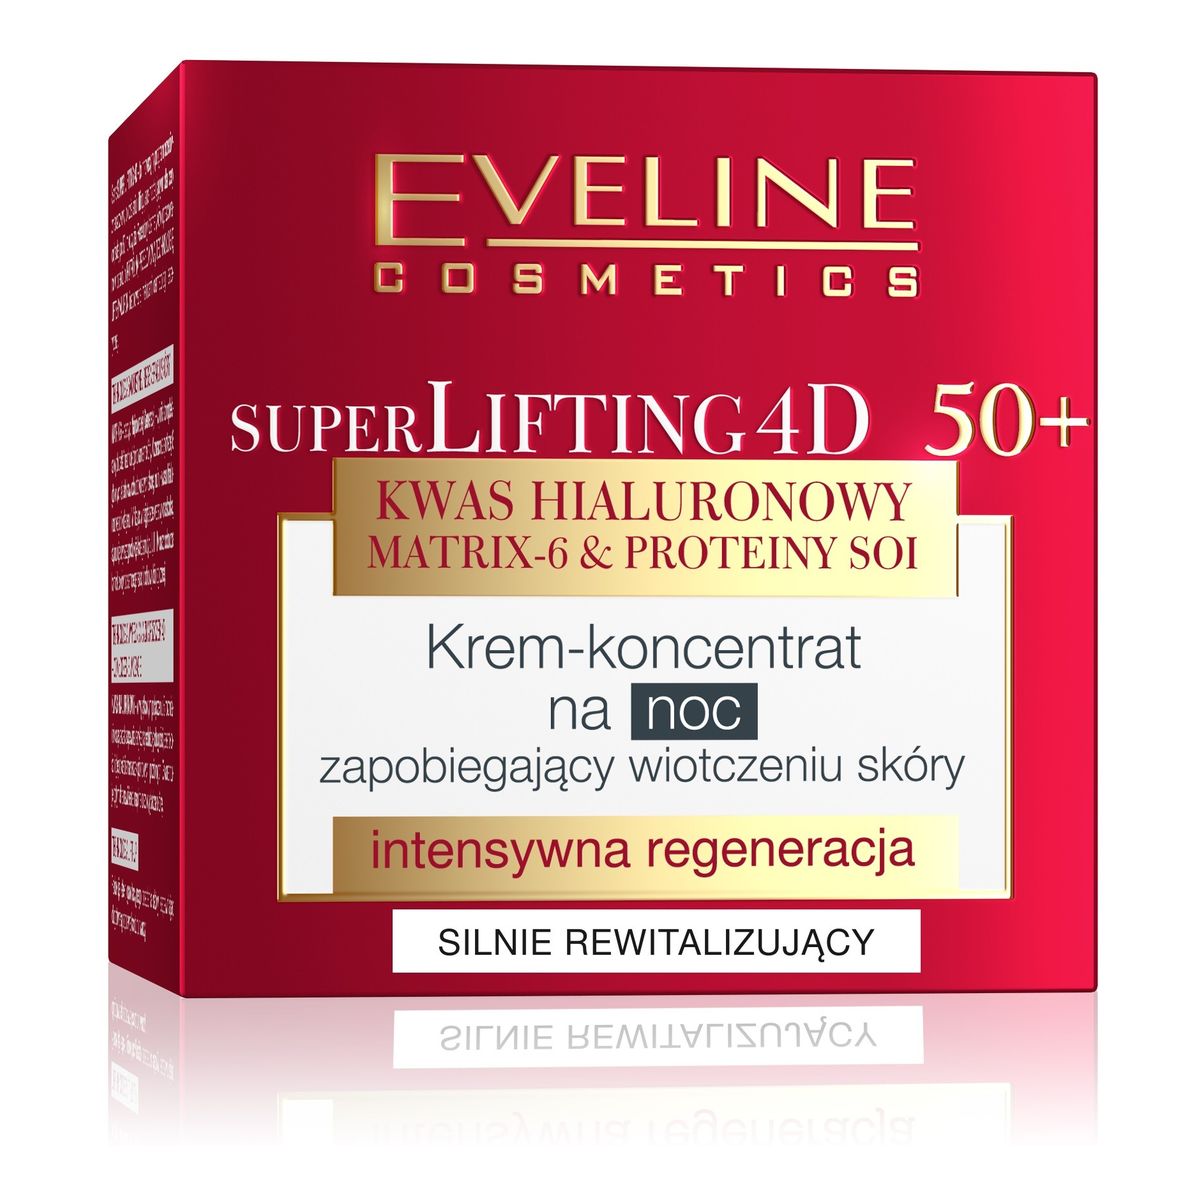 Eveline Super Lifting 4D Krem - koncentrat rewitalizujący na noc 50+ 50ml